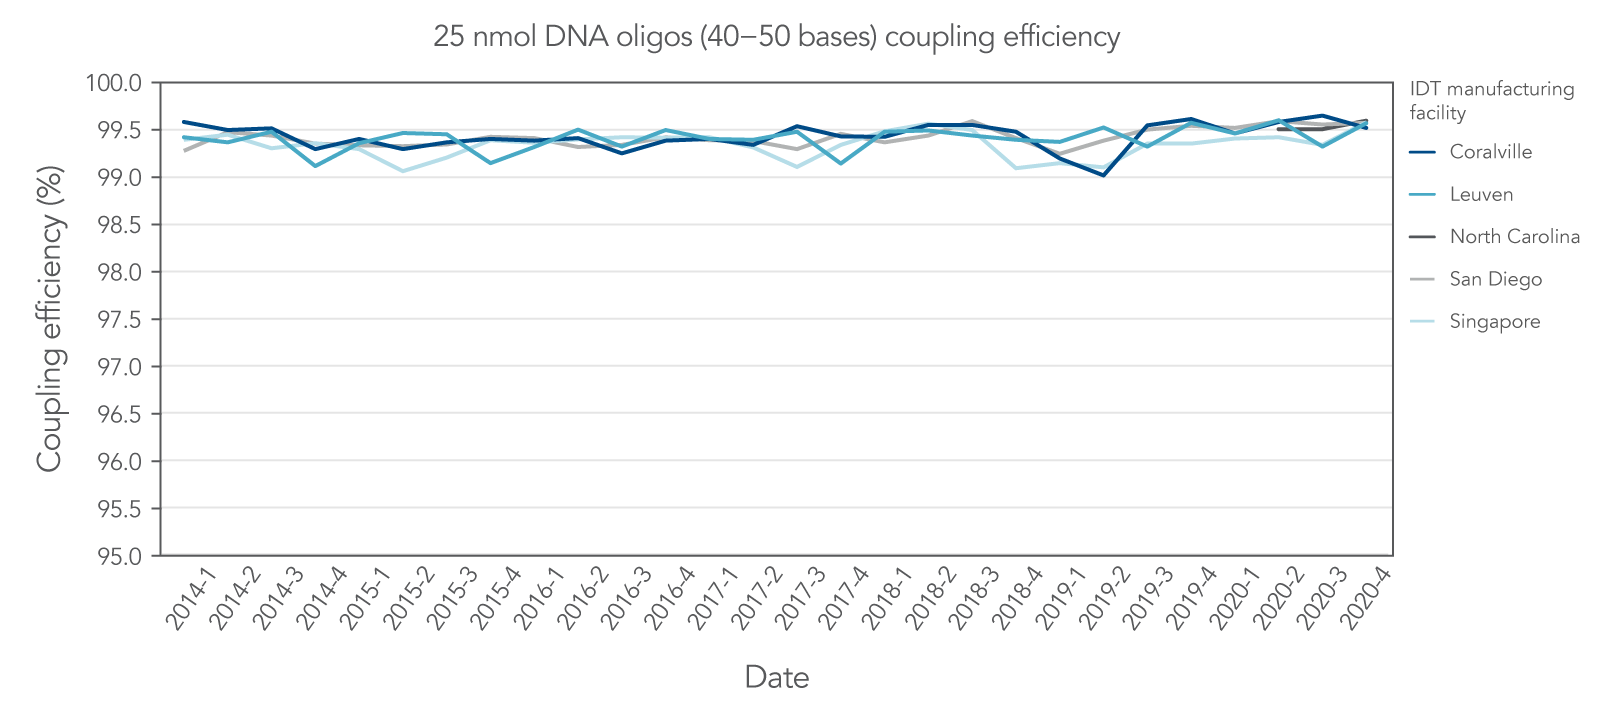 Thirty day rolling average of IDT oligo coupling efficiency.